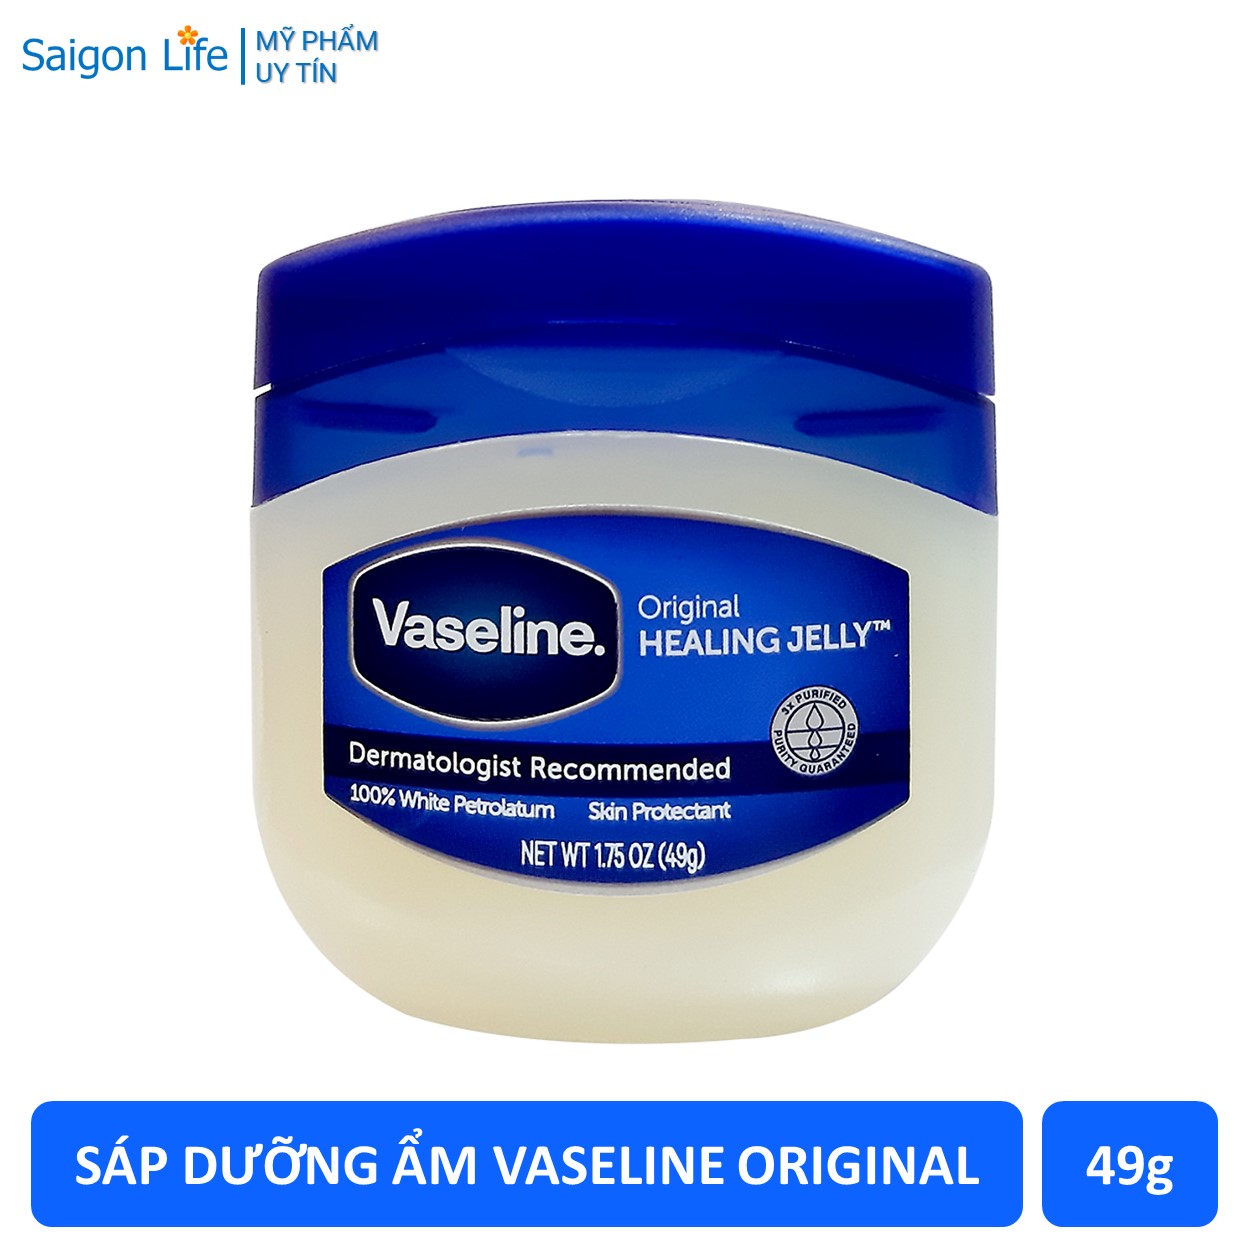 Sáp Dưỡng Ẩm Vaseline 49g Original 100% White Petrolatum